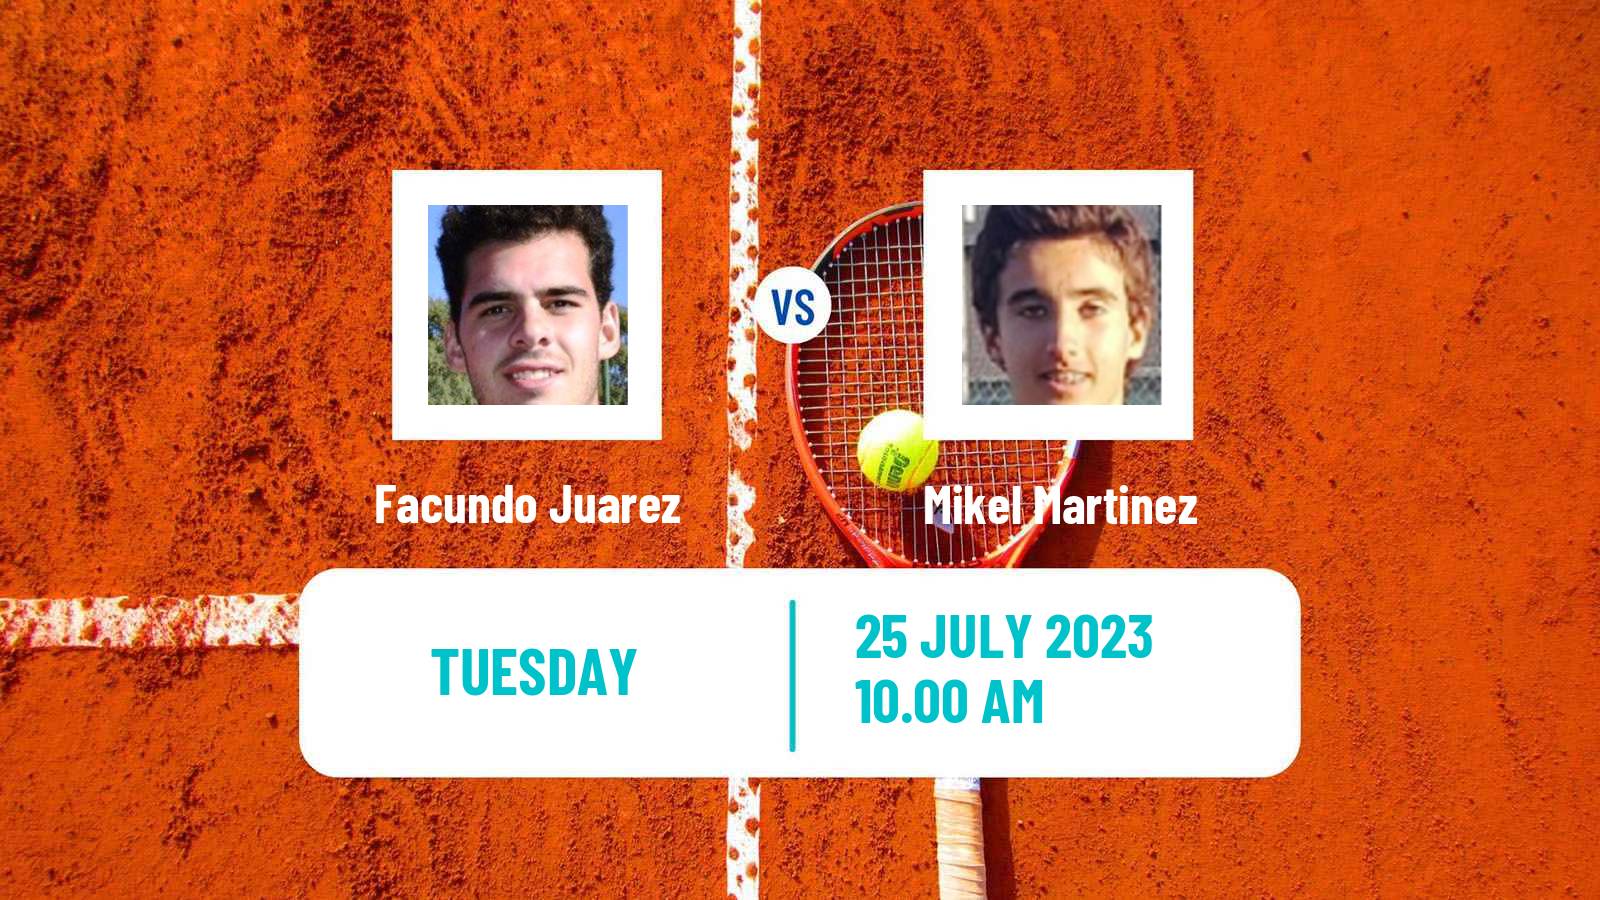 Tennis ITF M25 Denia Men Facundo Juarez - Mikel Martinez